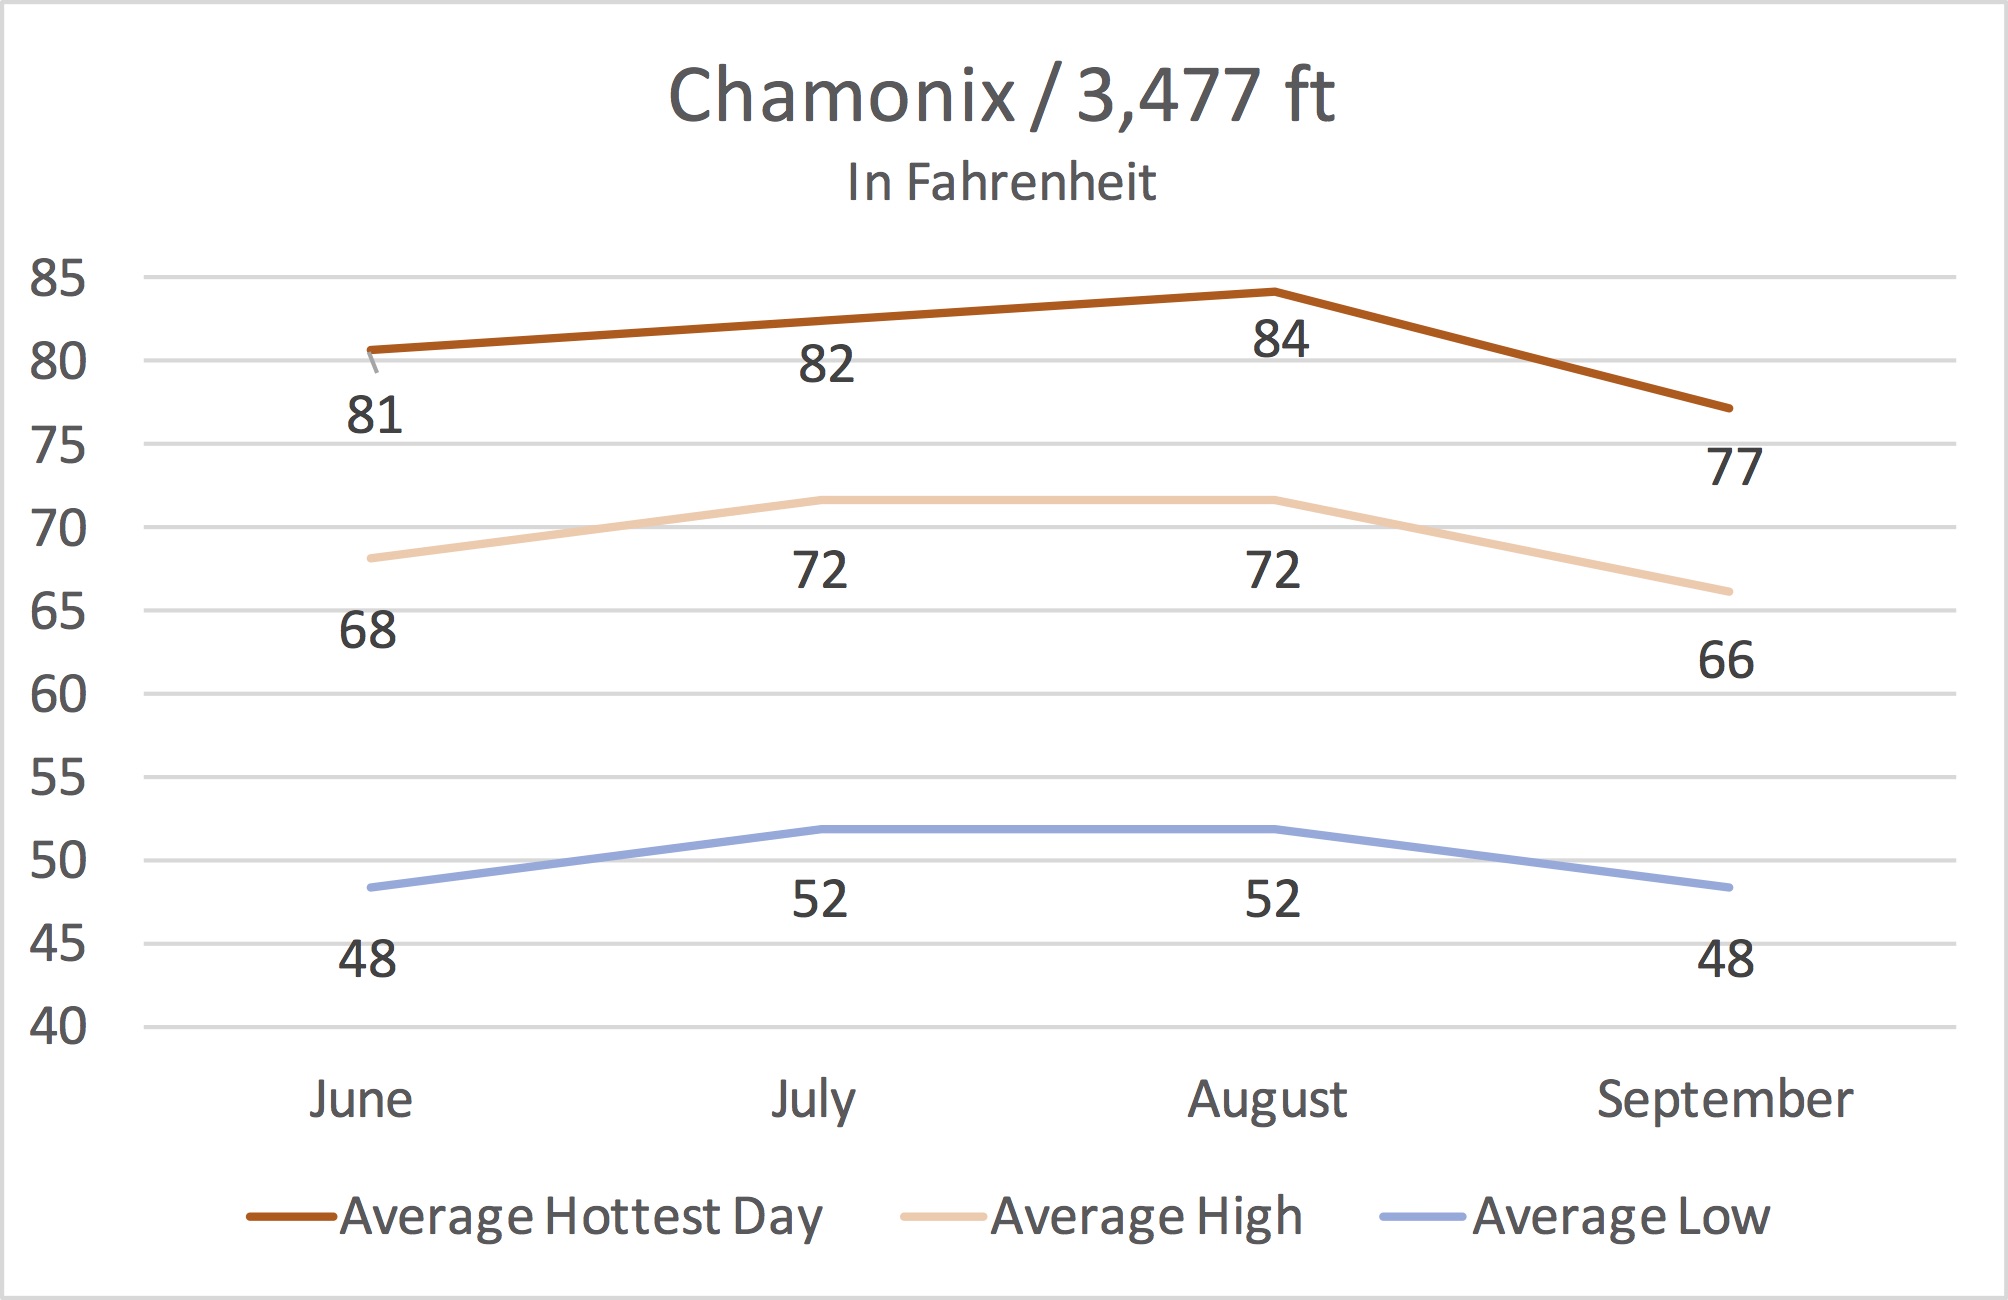 Chamonix average temperature from June to September